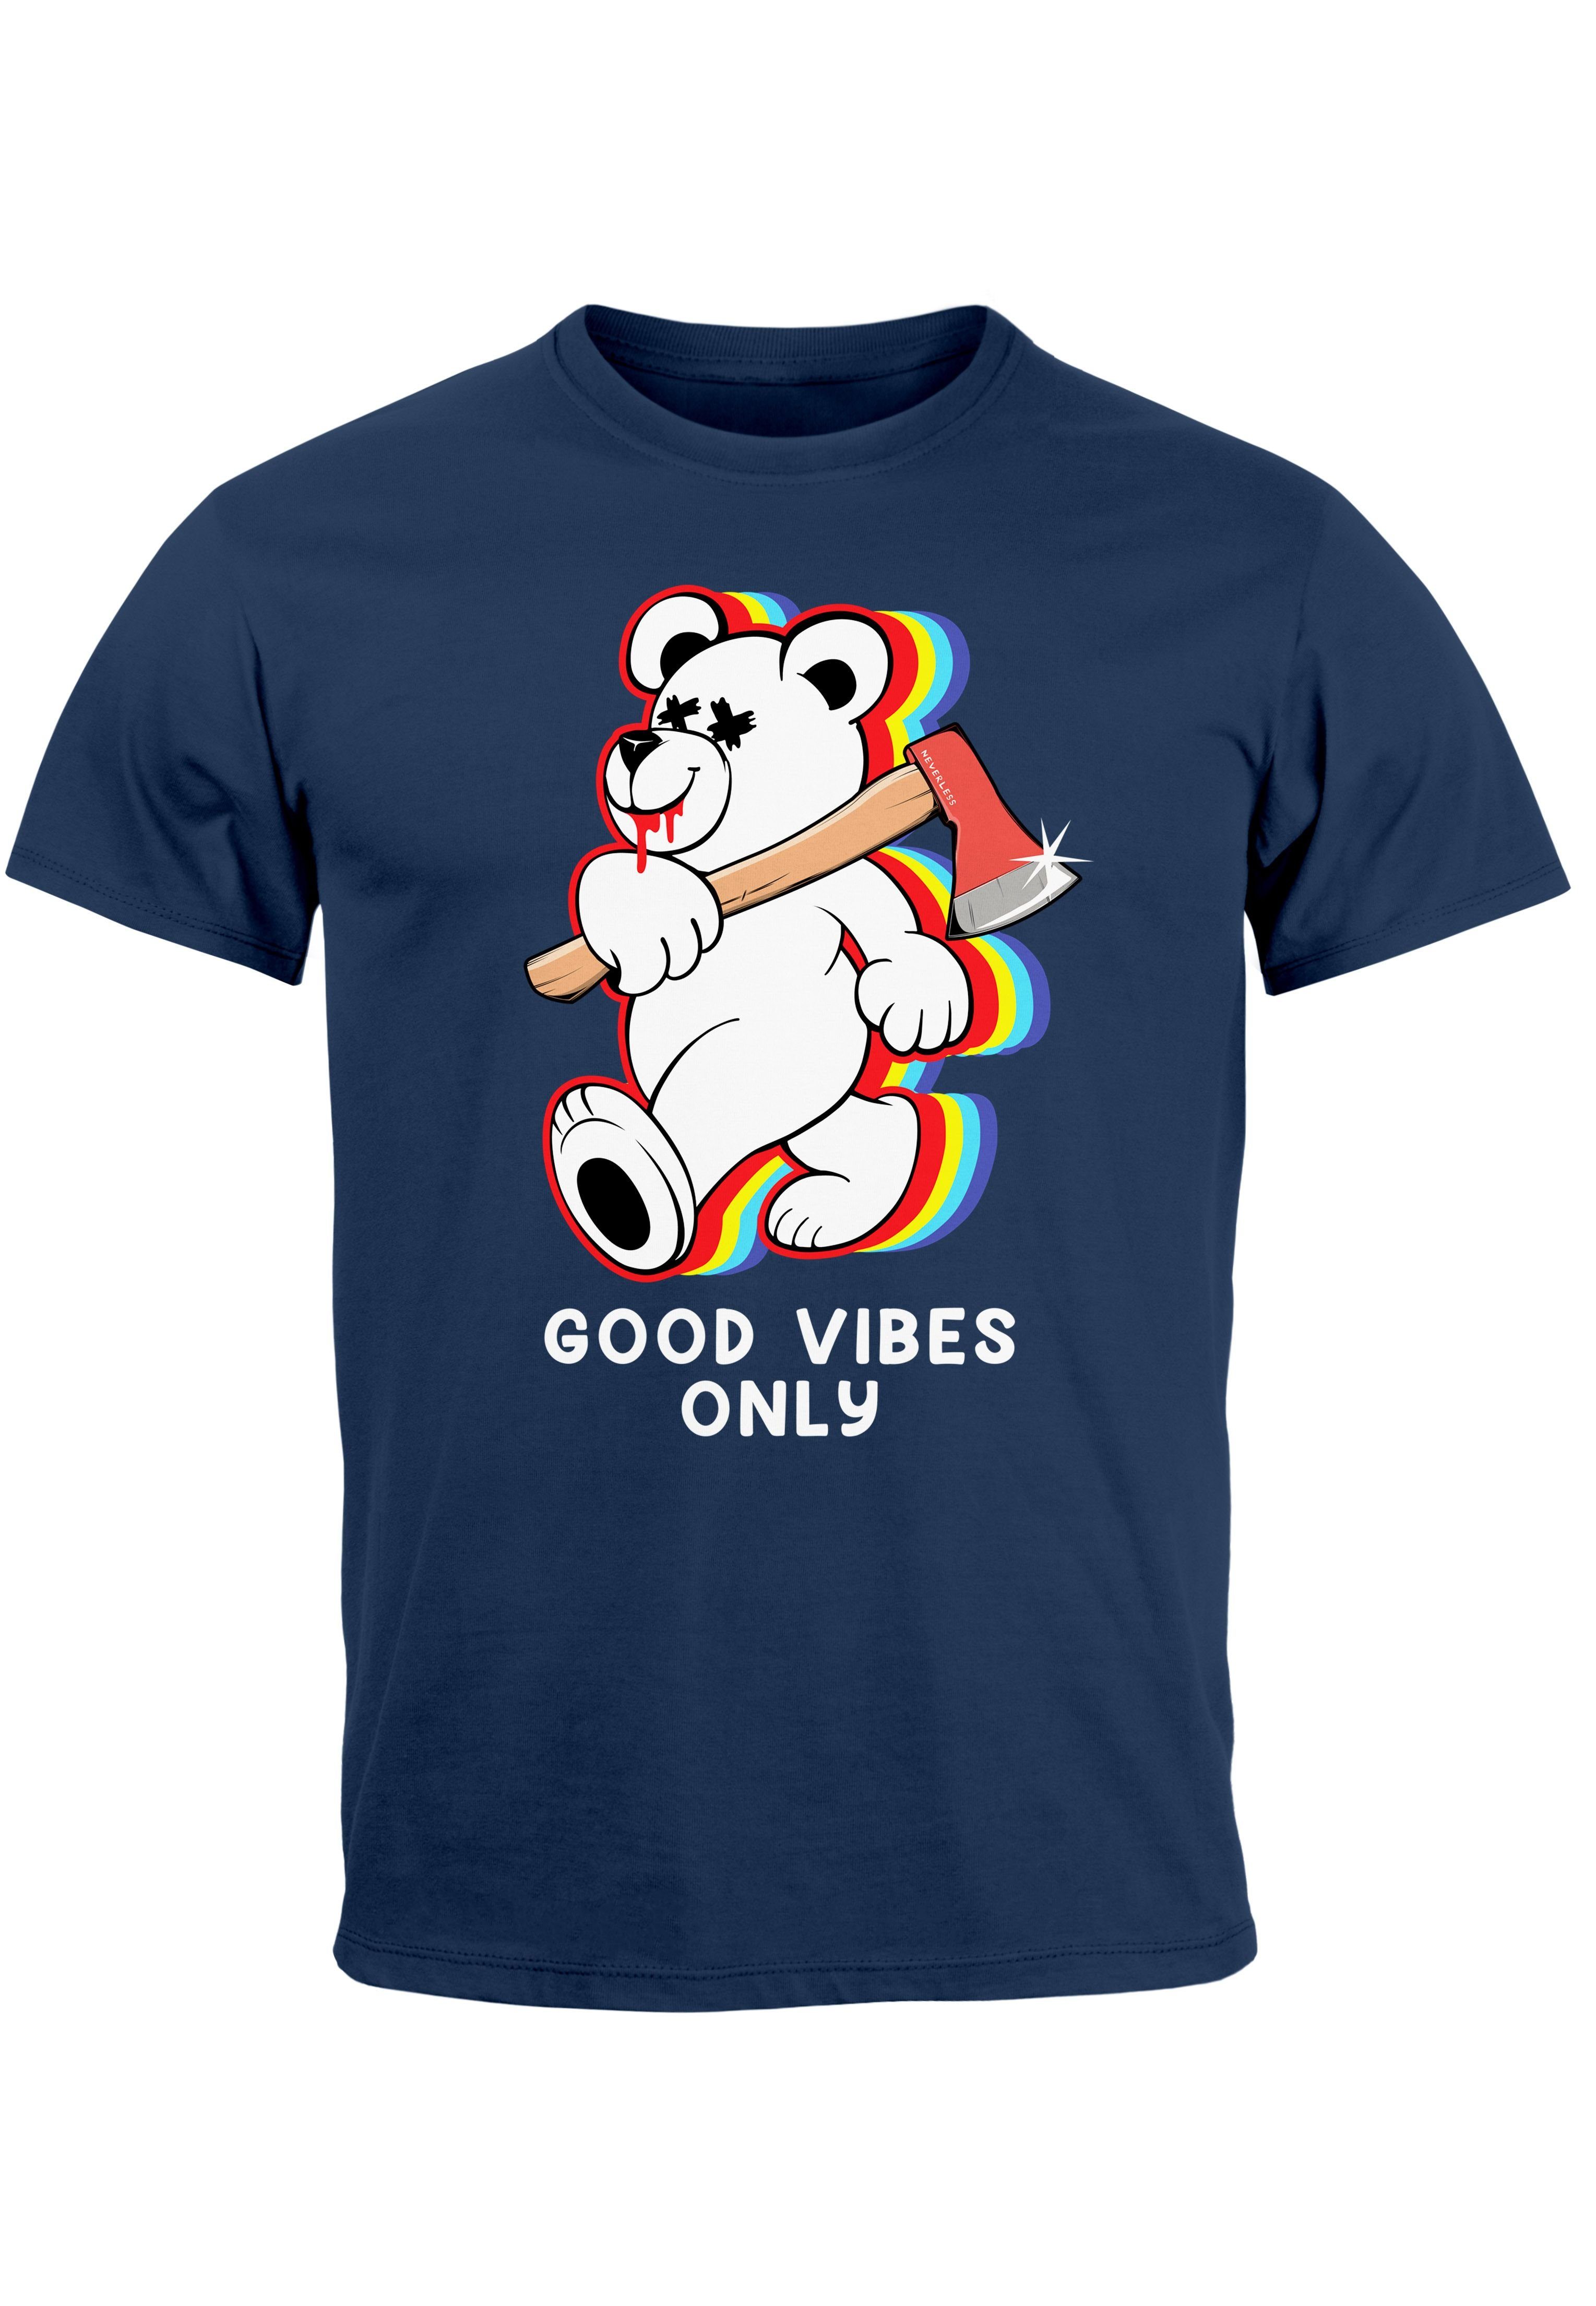 Neverless Print-Shirt Herren T-Shirt Good mit Vibes navy Axt Sarkasmus Teddy Teachwear Bär Only Fashi Print